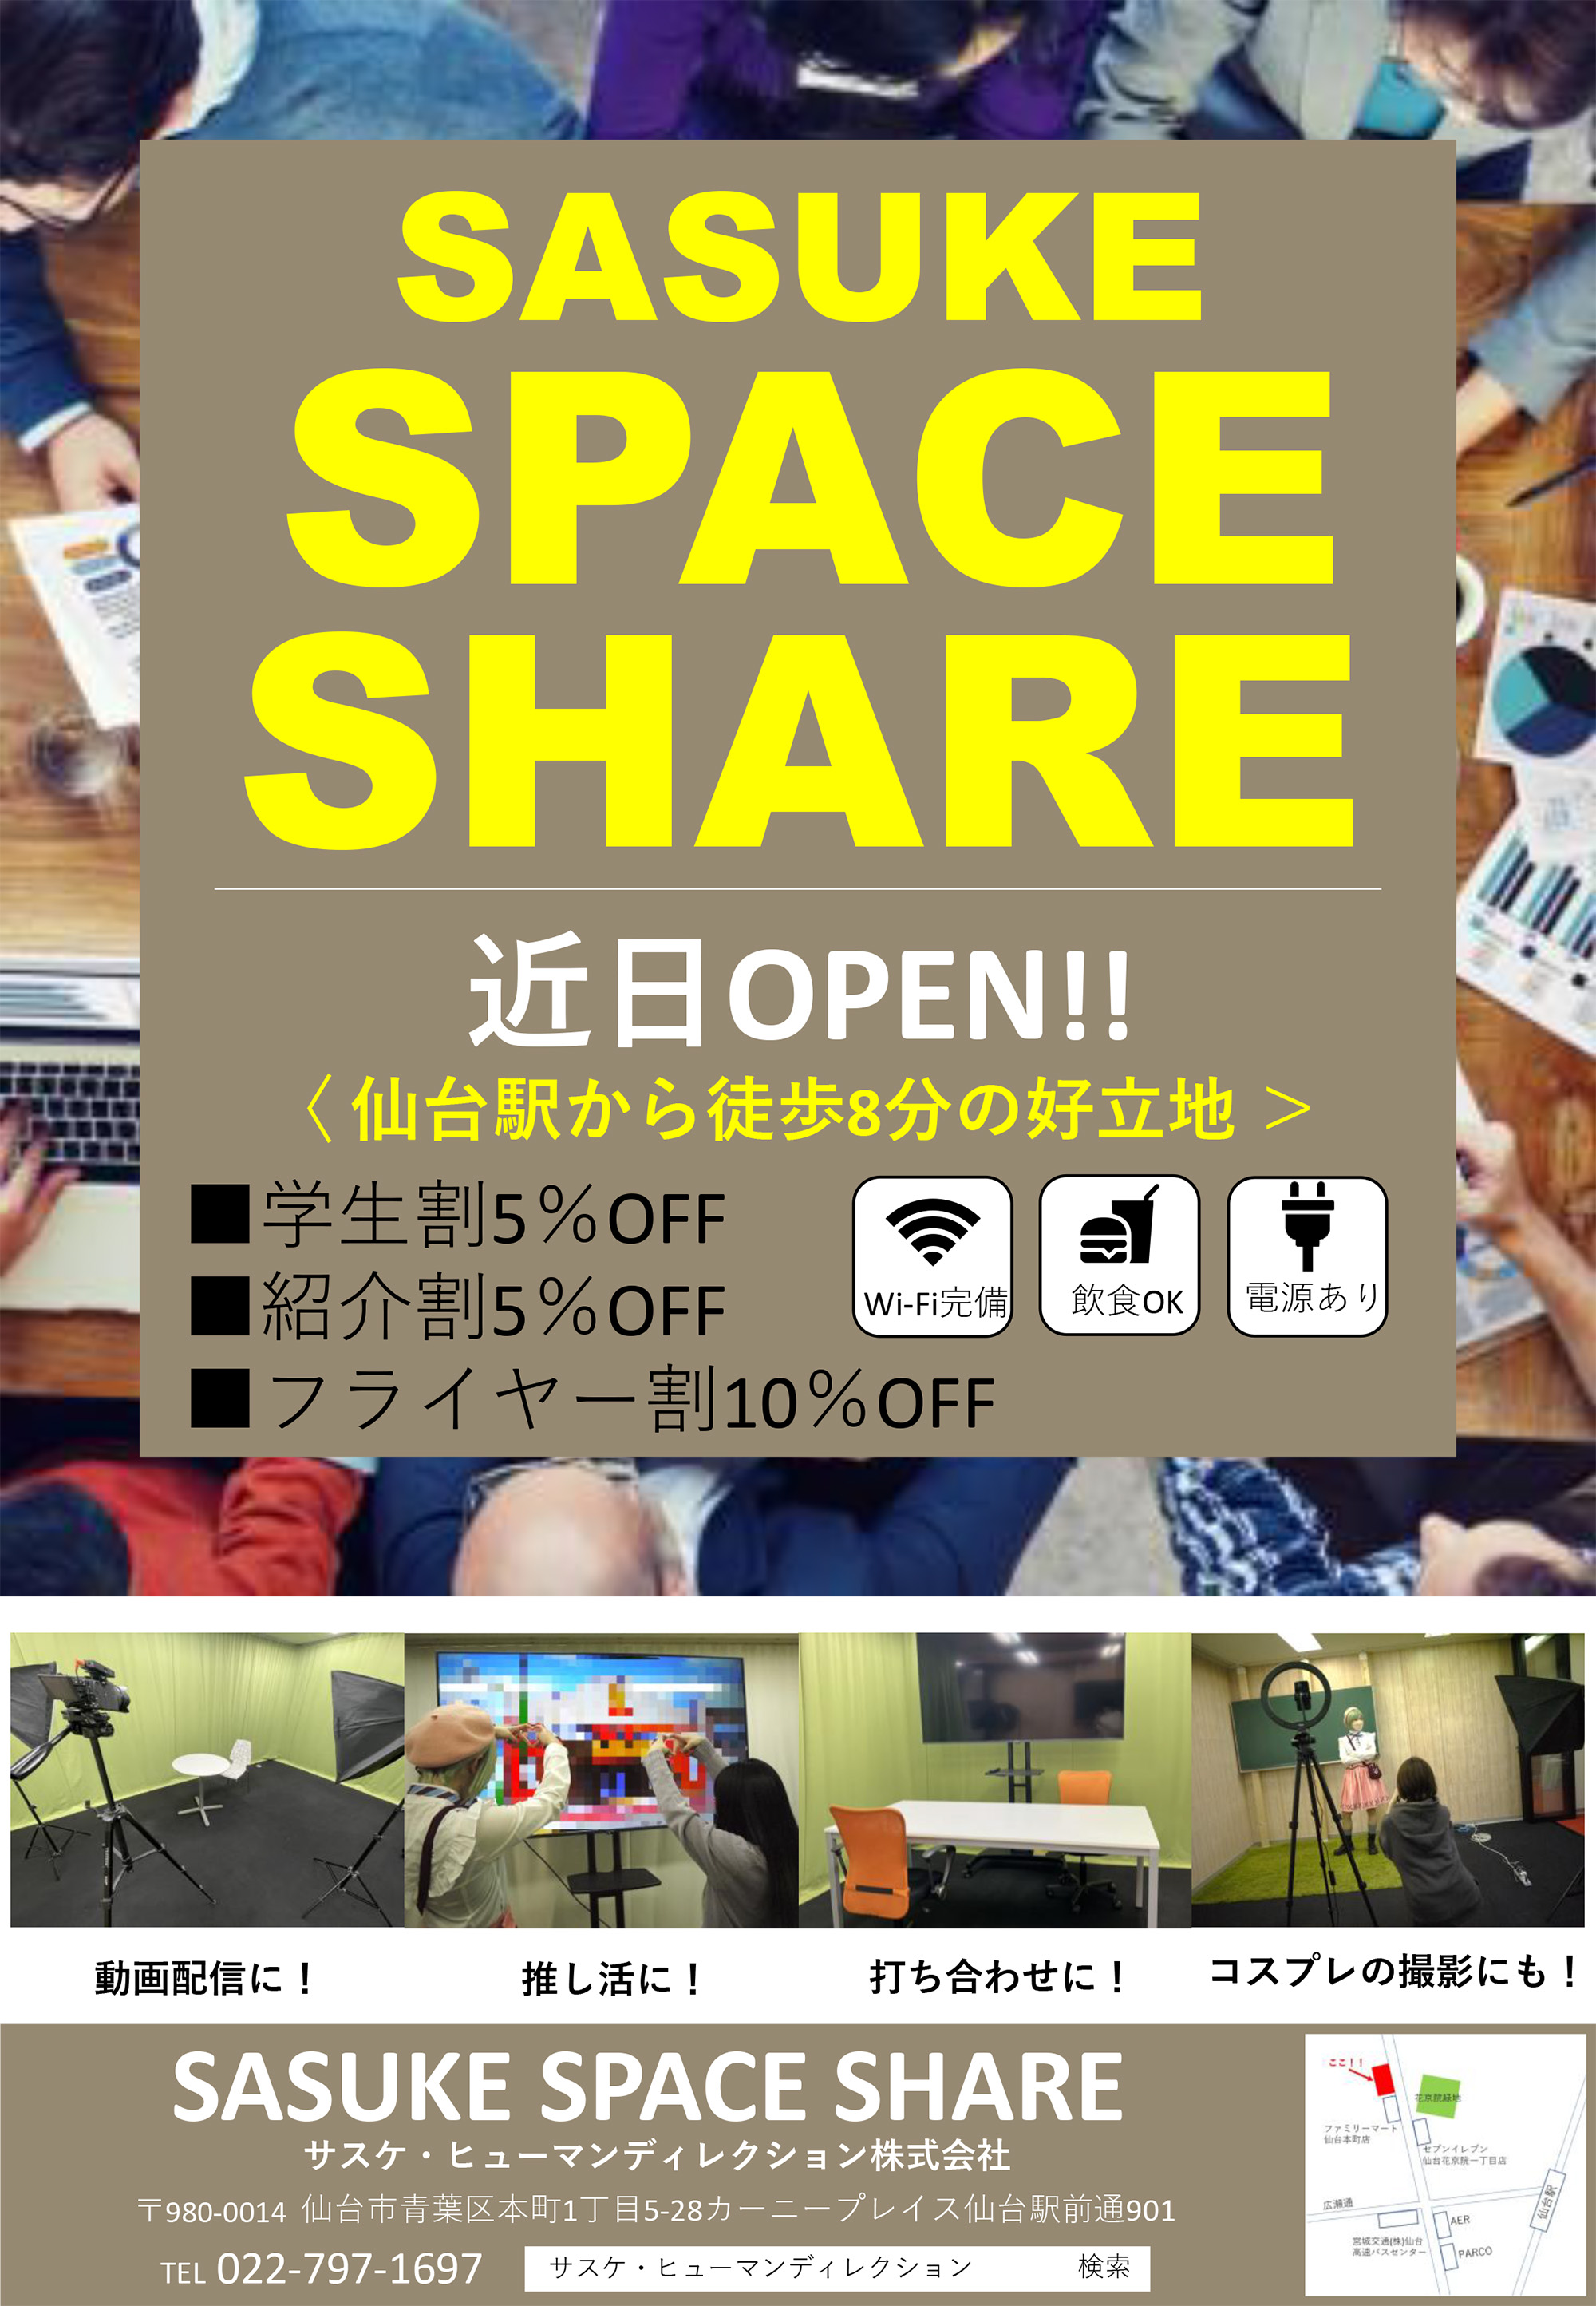 SASUKE SPACE SHARE 近日OPEN!